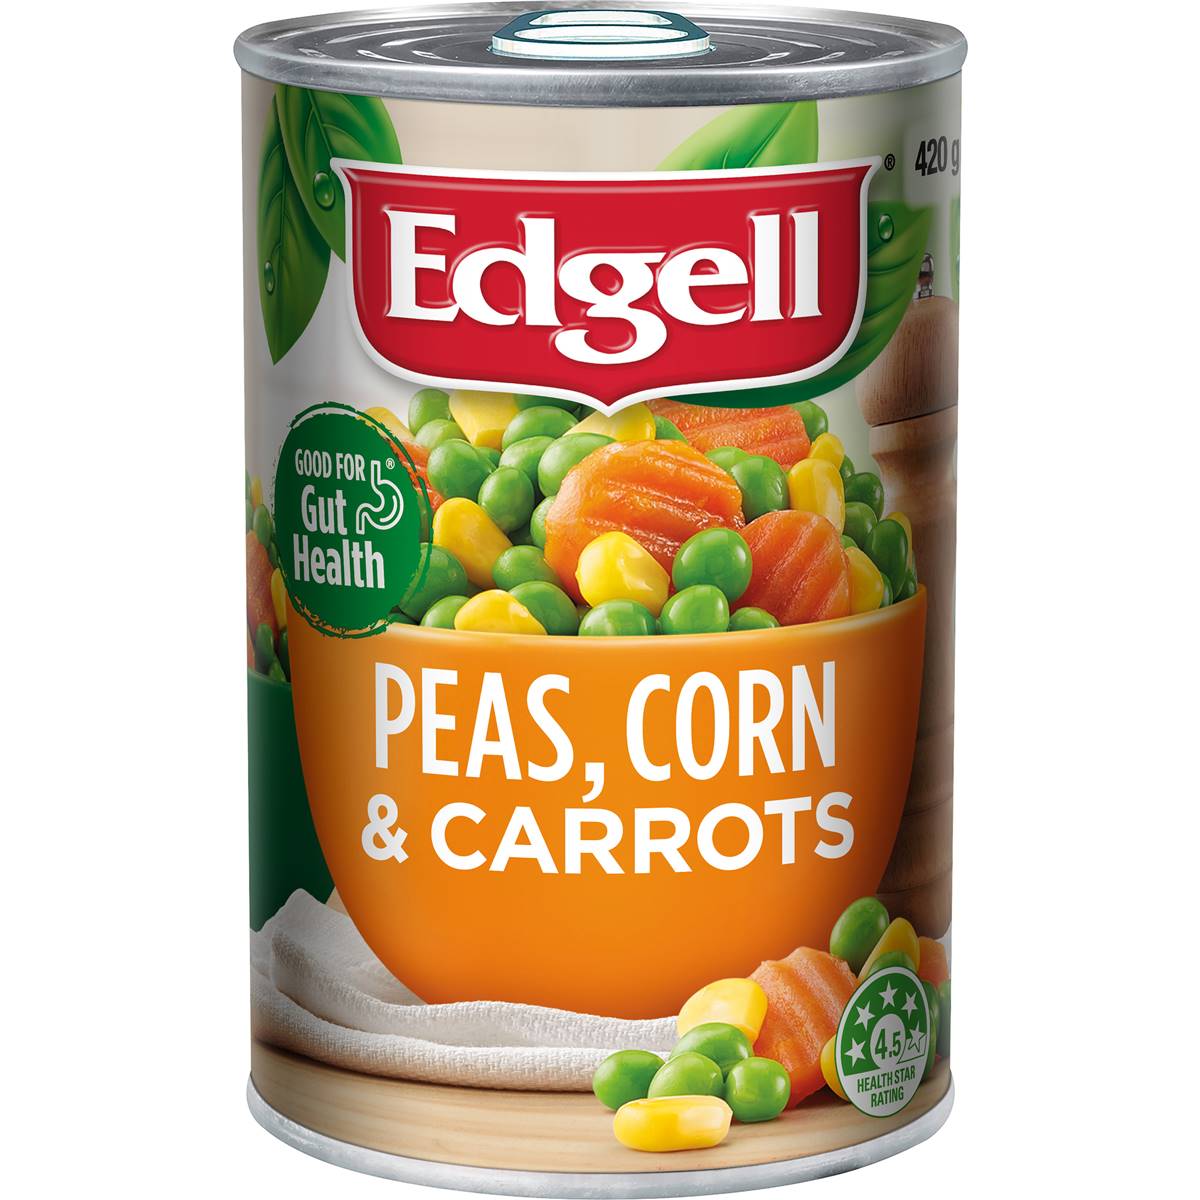 Edgell Peas Corn & Carrots Corn & Carrots